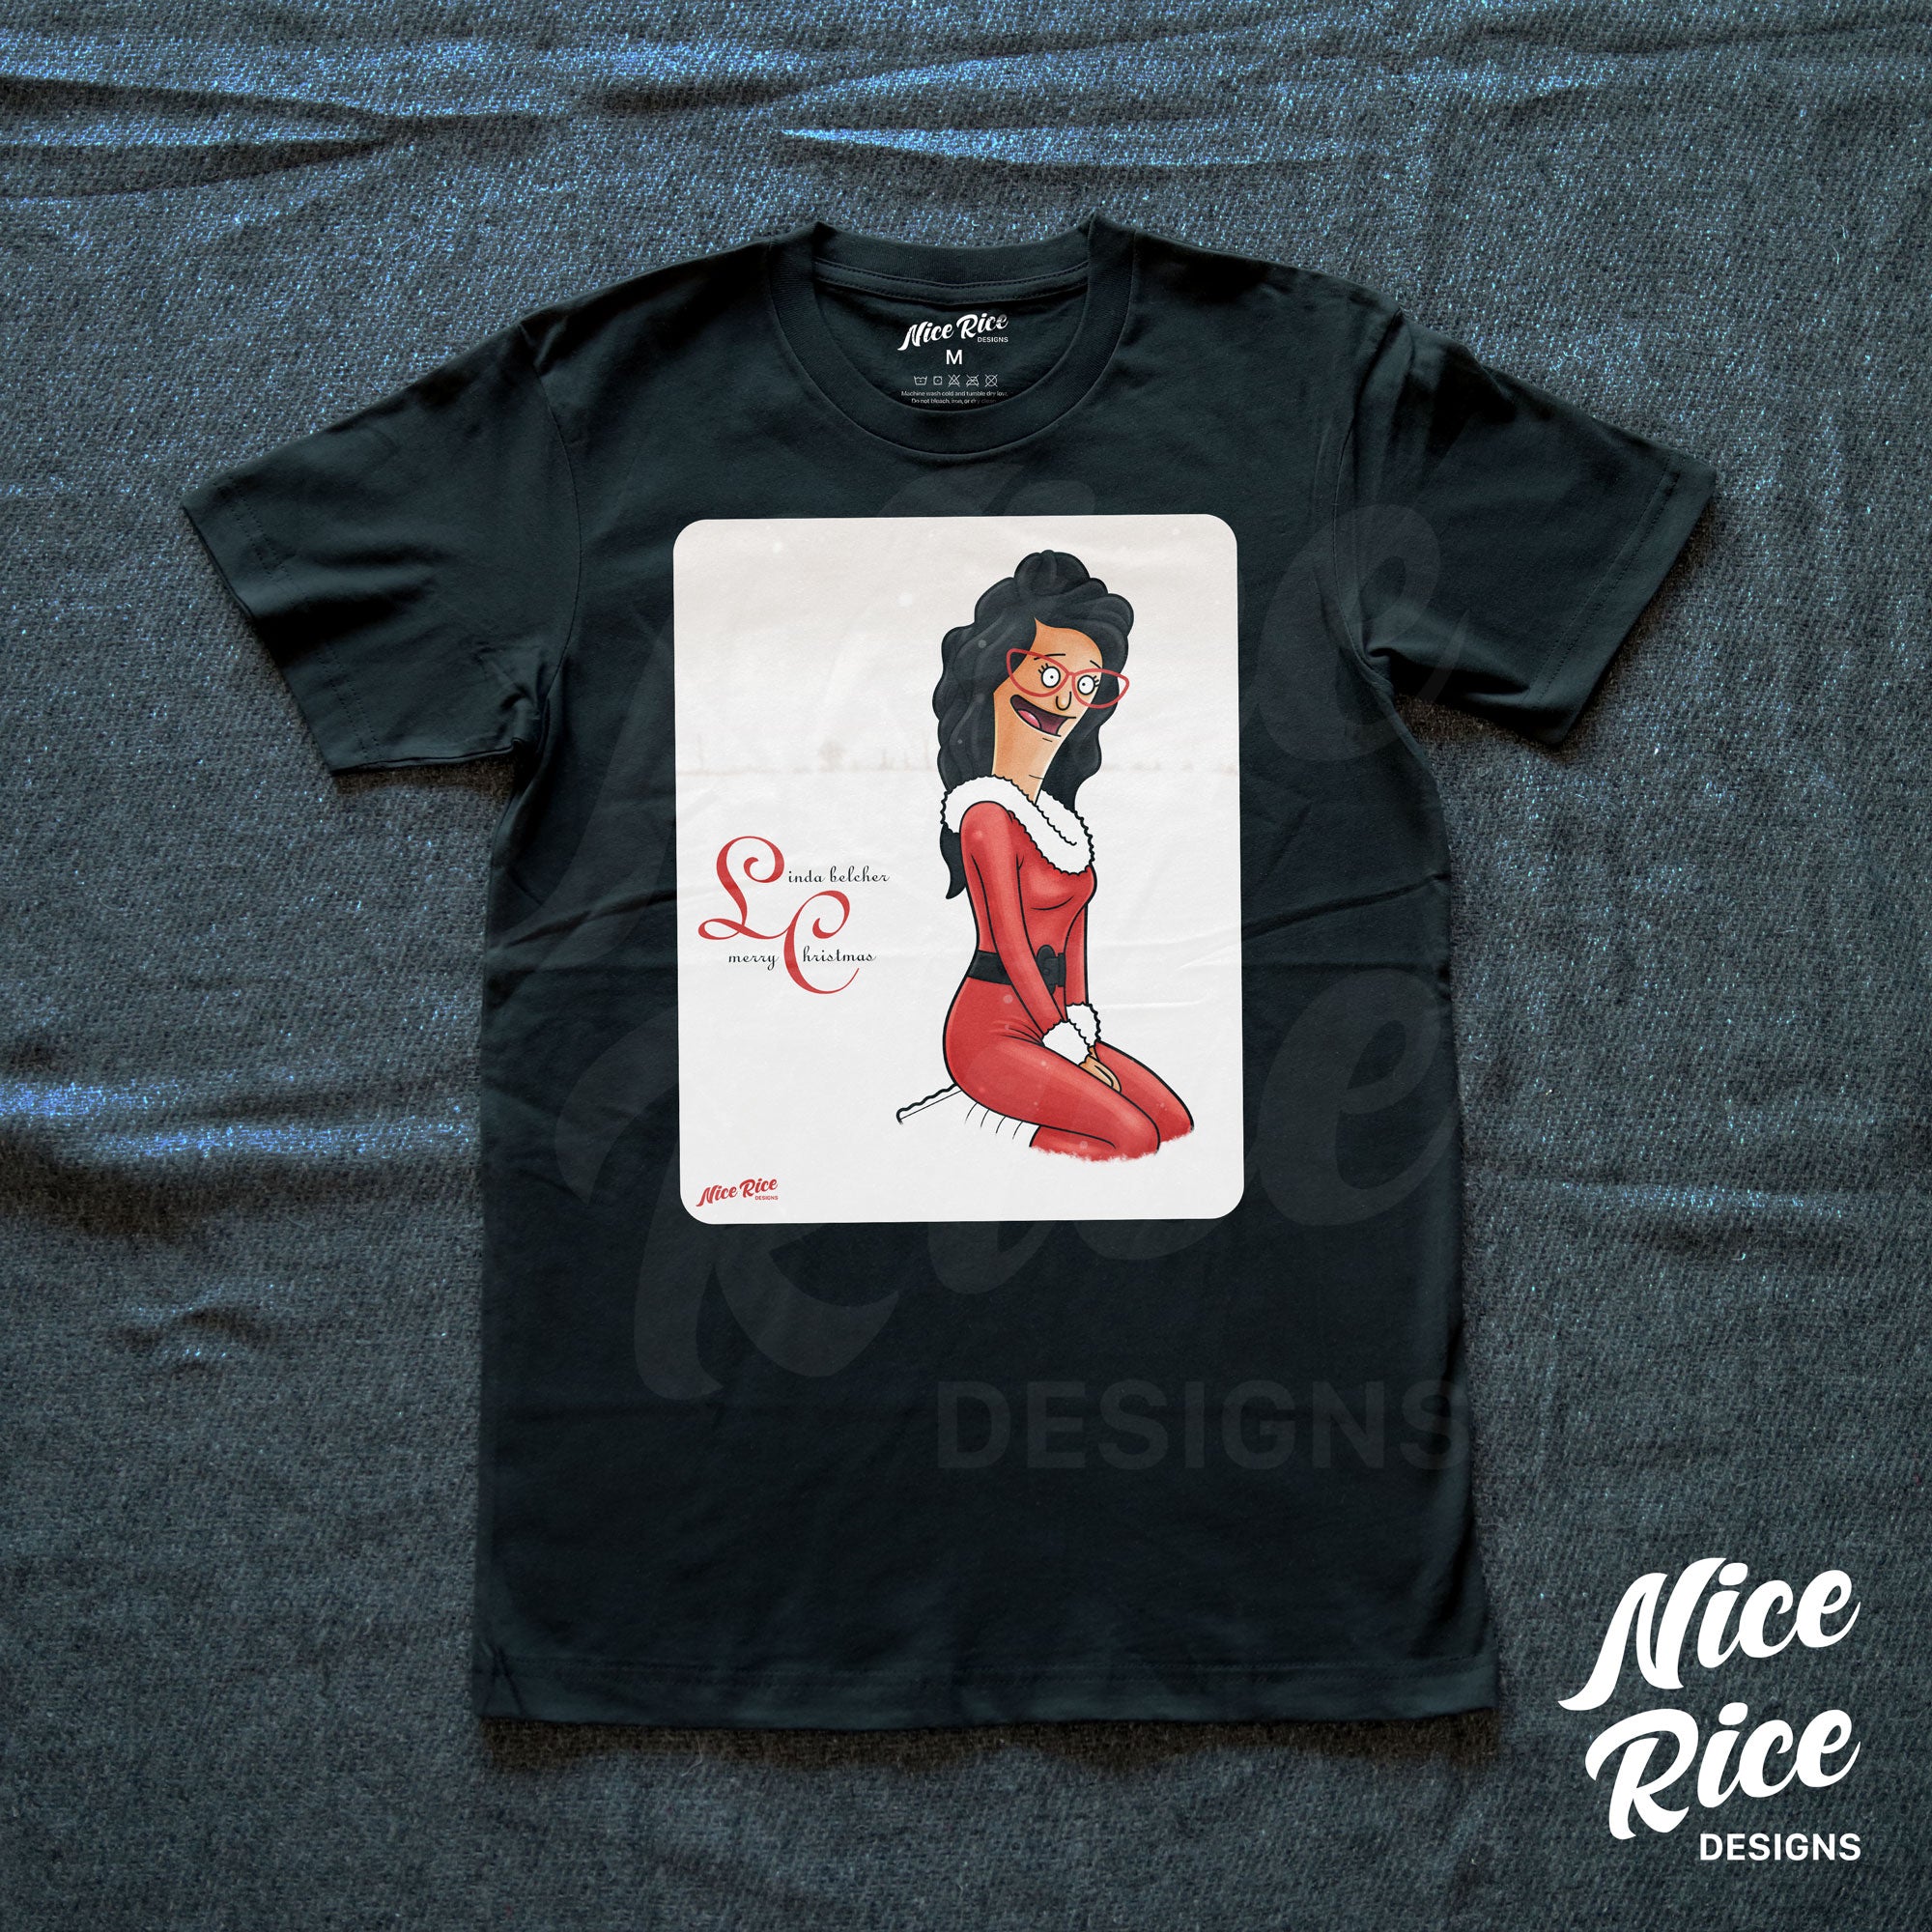 Merry Christmas Shirt by Nice Rice Designs